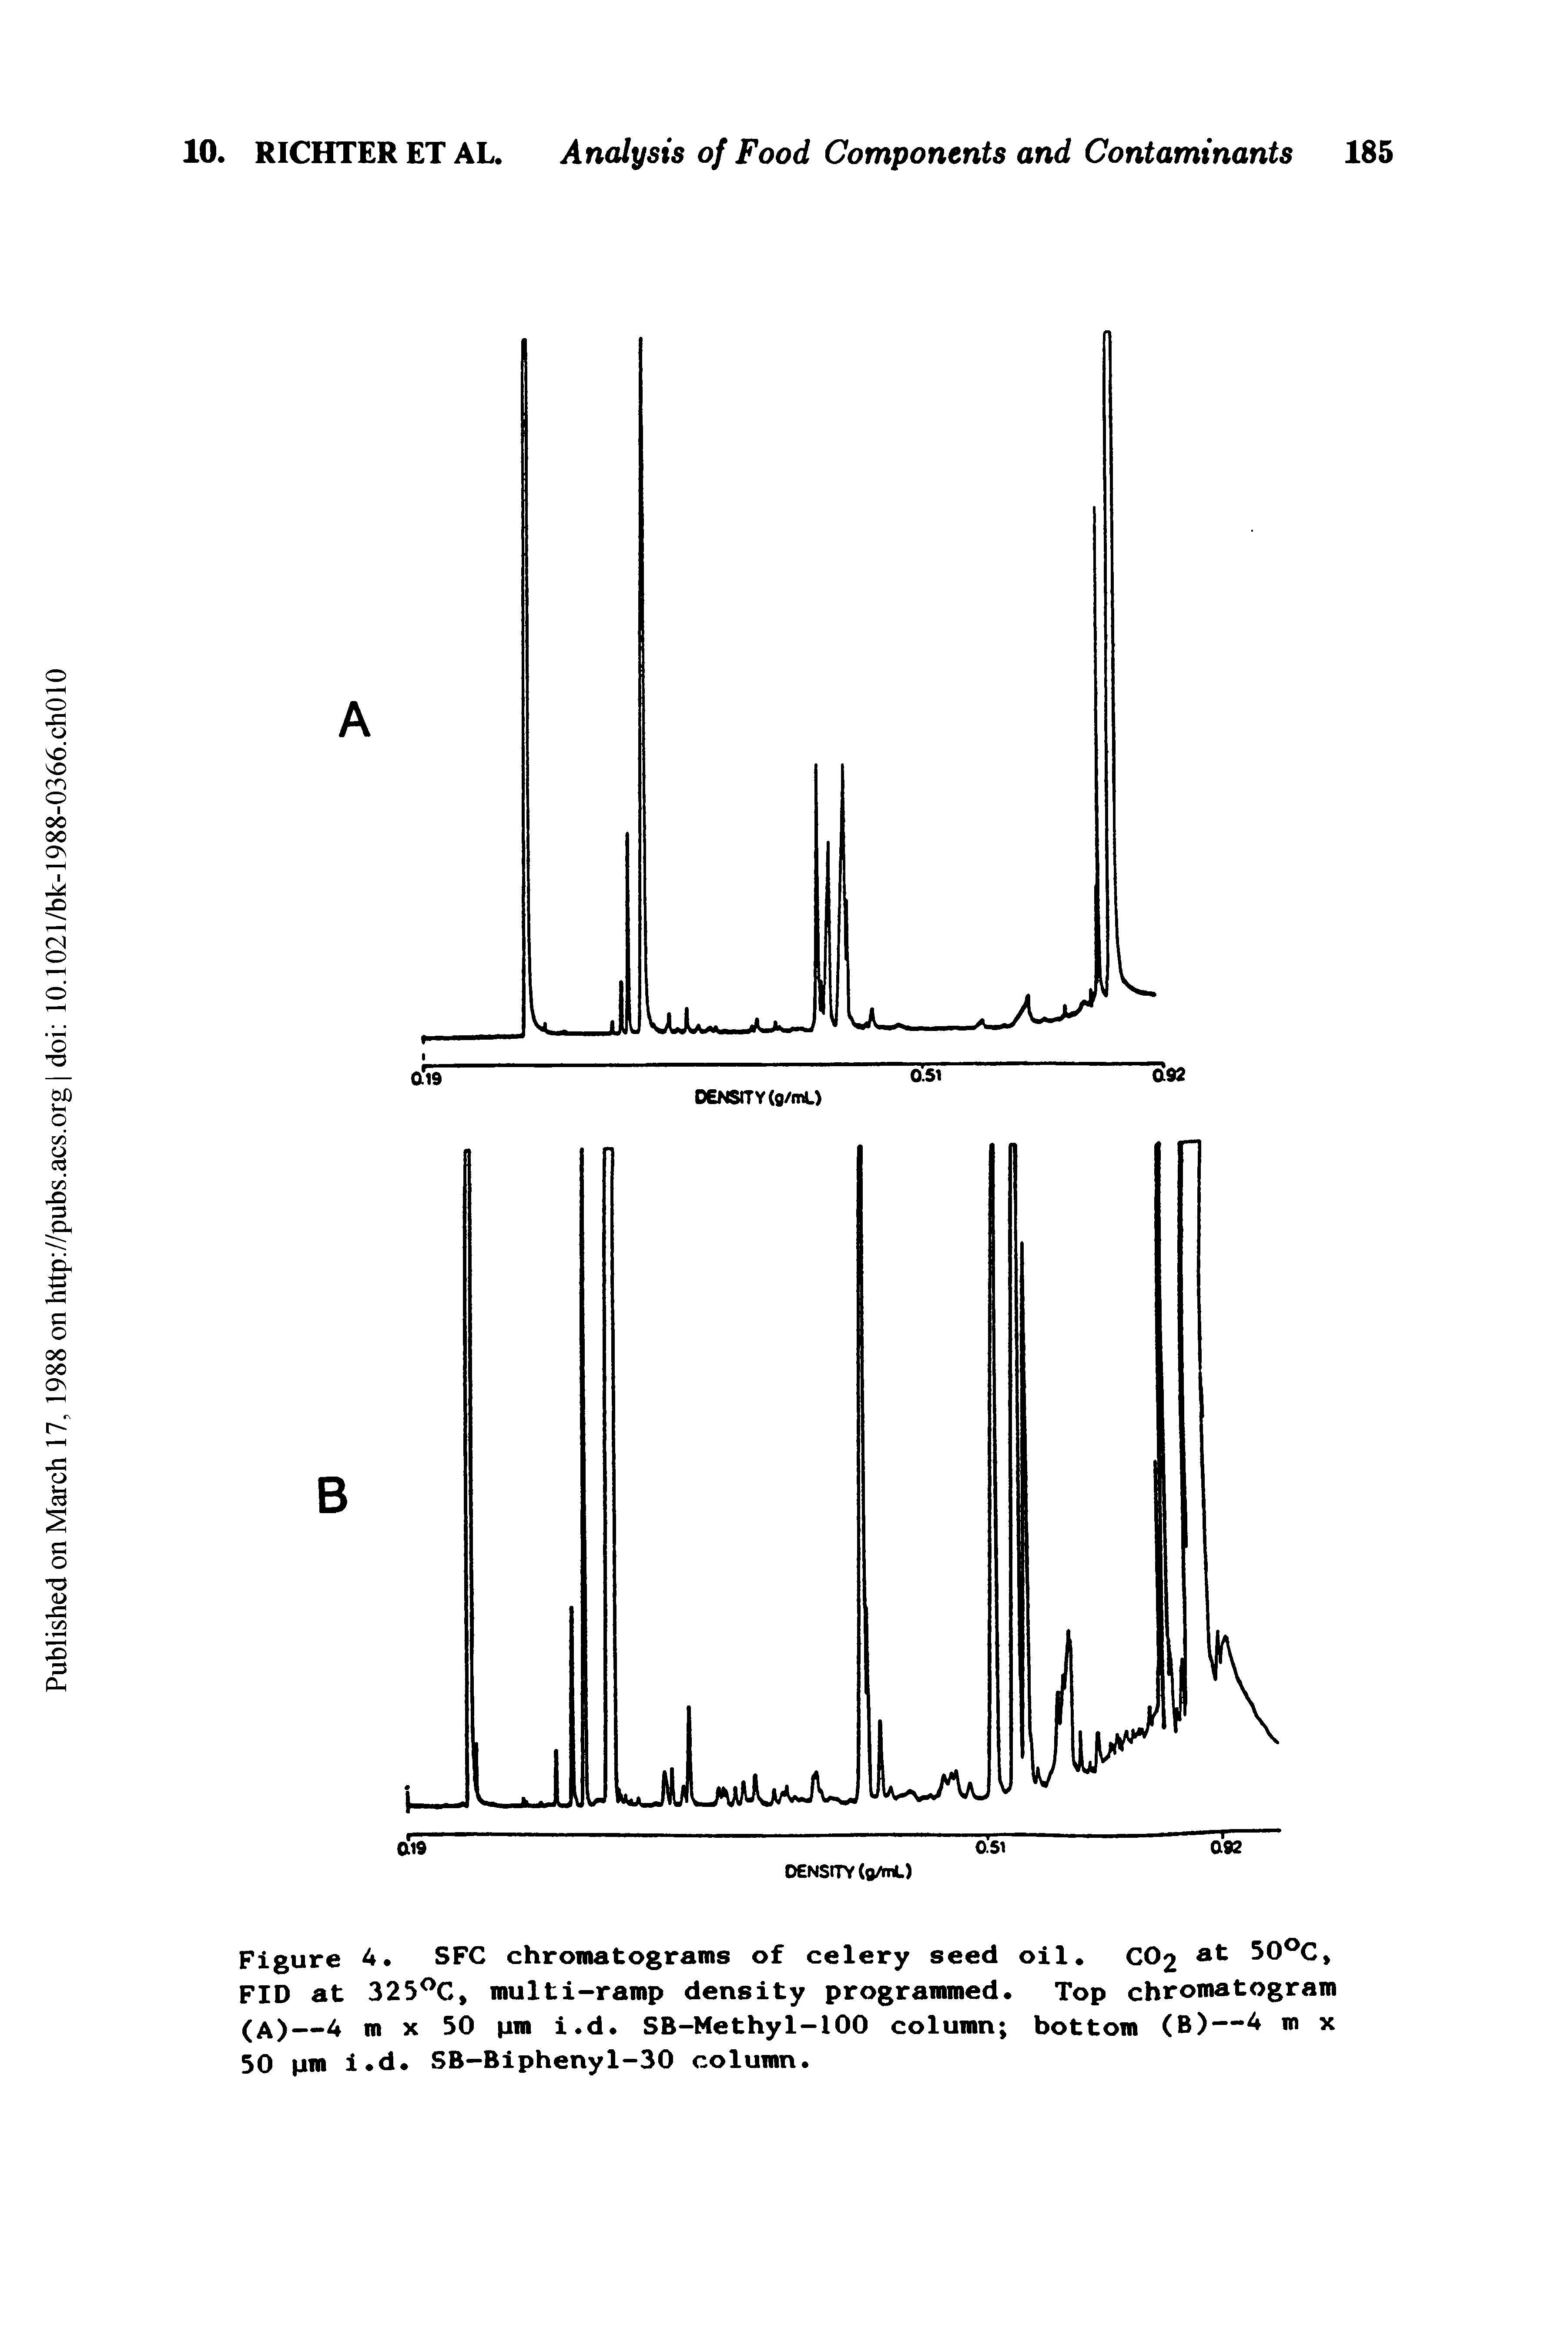 Figure 4. SFC chromatograms of celery seed oil. CO2 50 C, FID at 325 C, multi-ramp density programmed. Top chromatogram (A)—4 m X 50 pm i.d. SB-Methyl-100 column bottom (B)—4 m x 50 iTO i d. SB-Biphenyl-30 column.